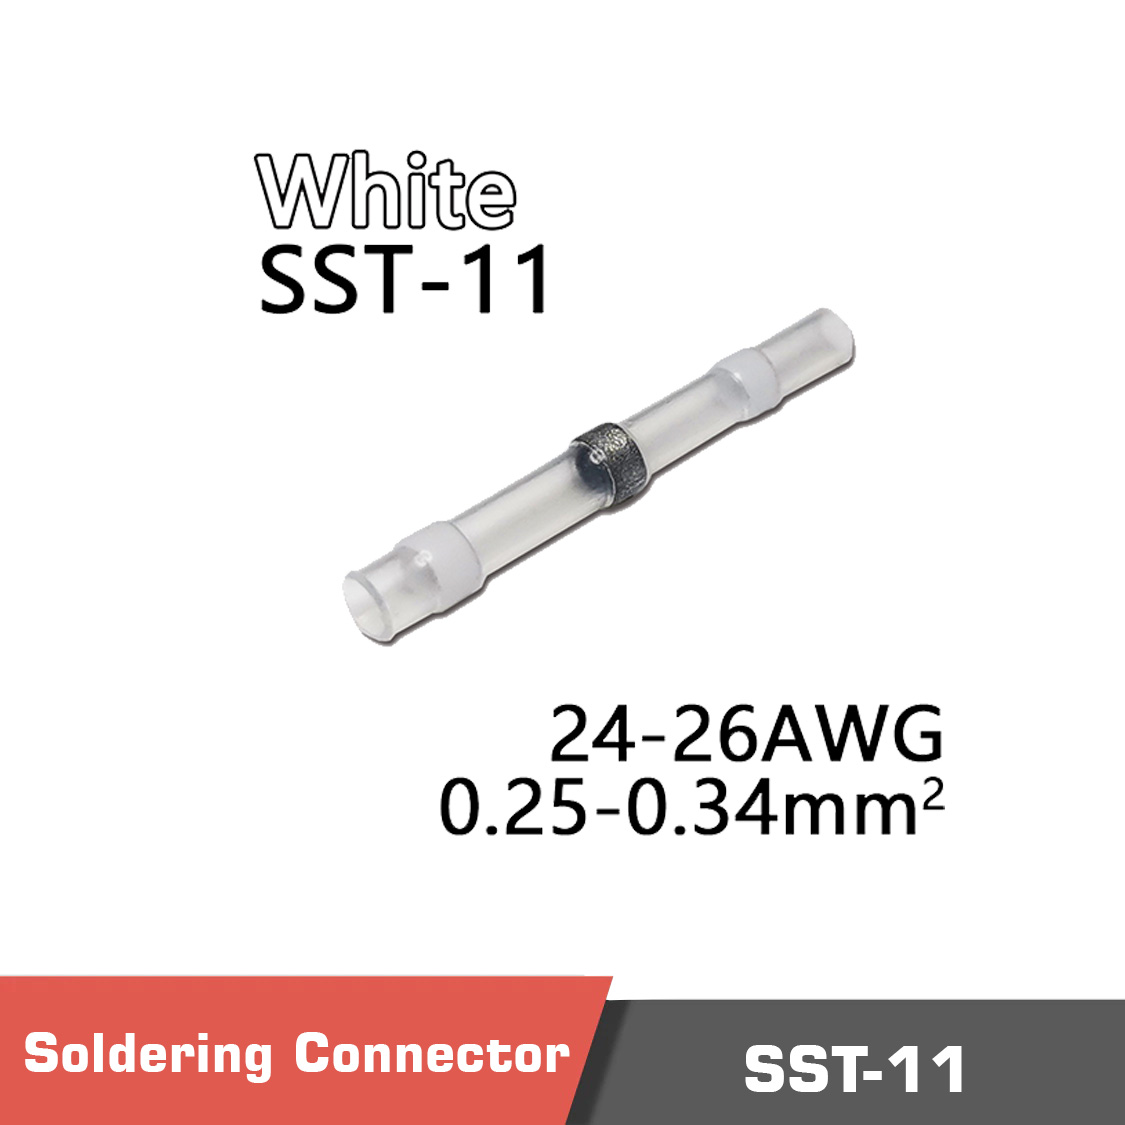 Sst 11 - sst-21, sst-21 soldering connector, soldering connector - motionew - 13